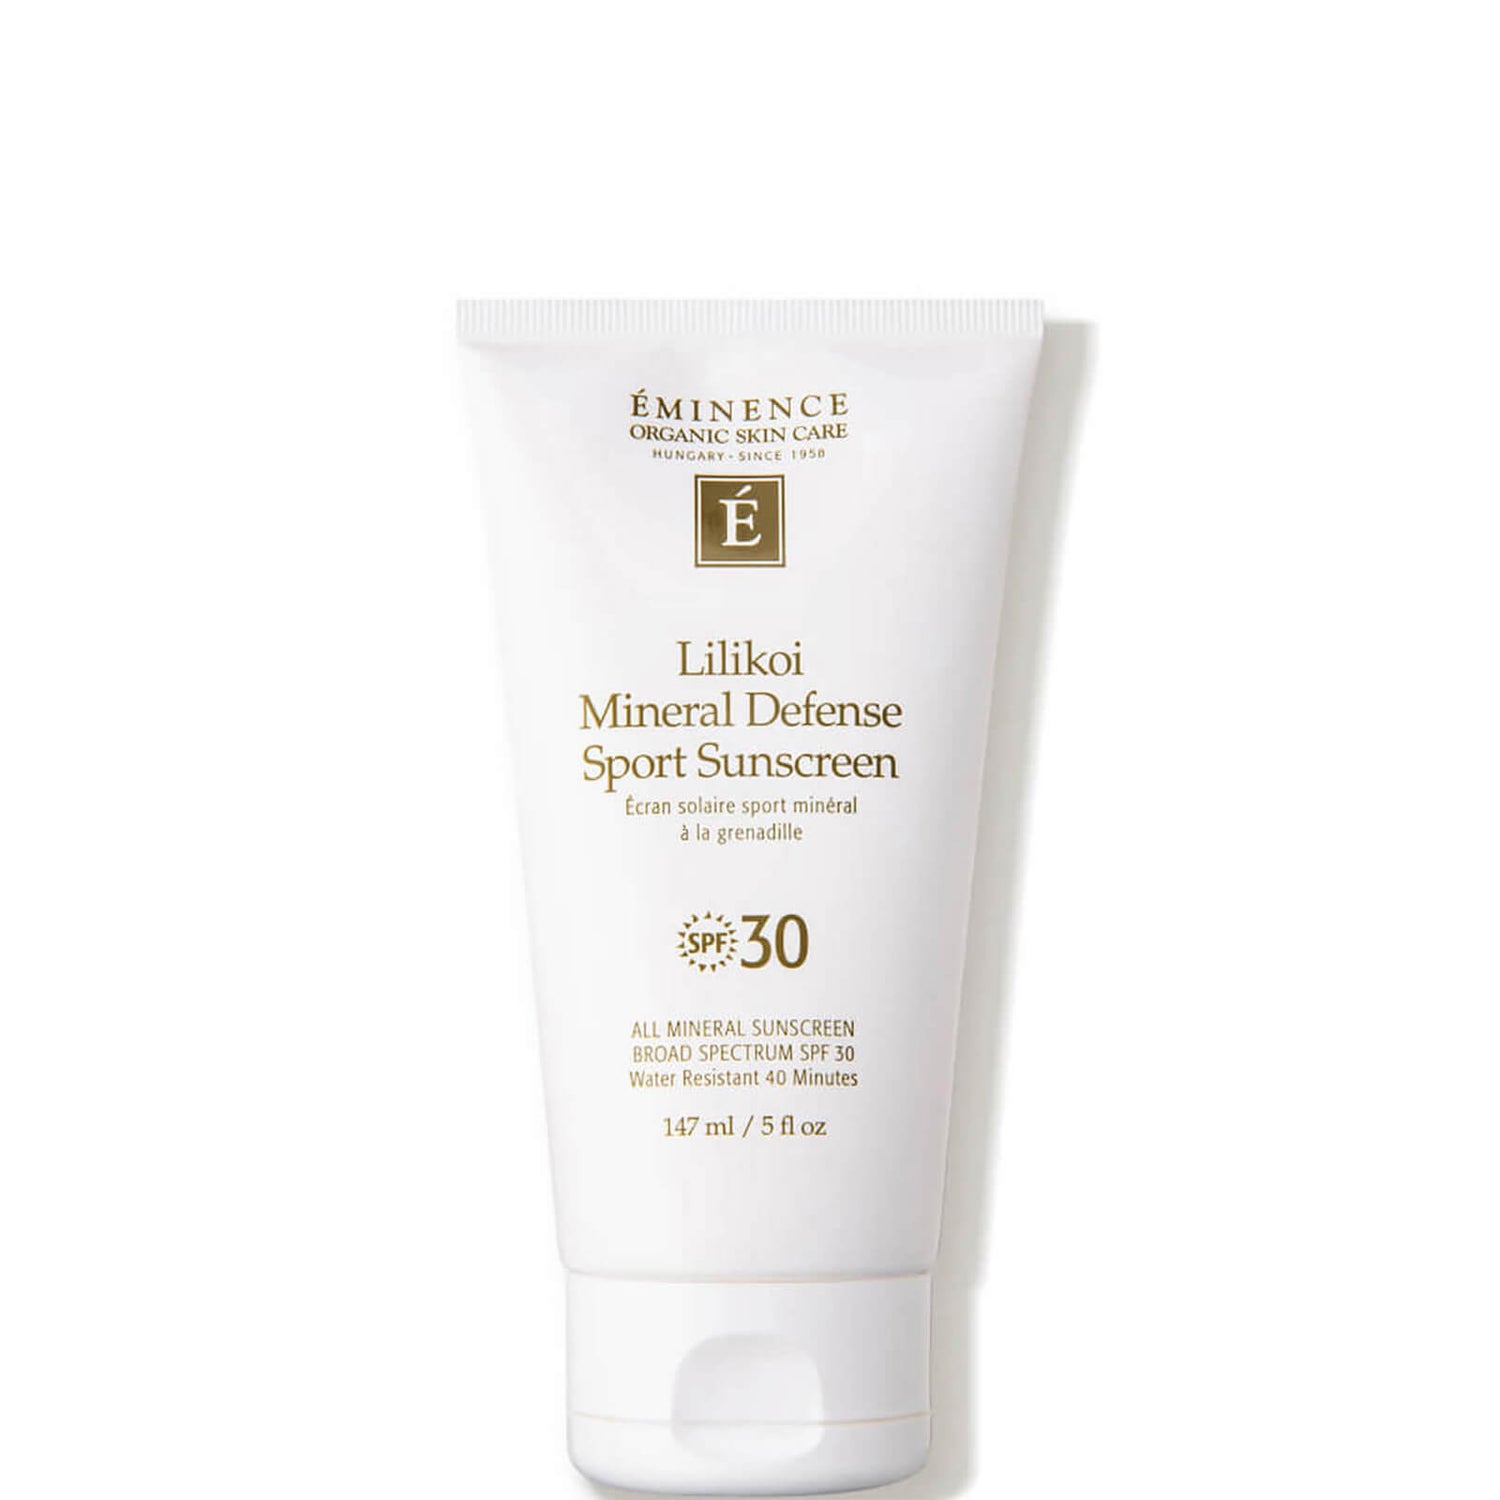 Eminence Organic Skin Care Lilikoi Mineral Defense Sport Sunscreen SPF 30 5 oz